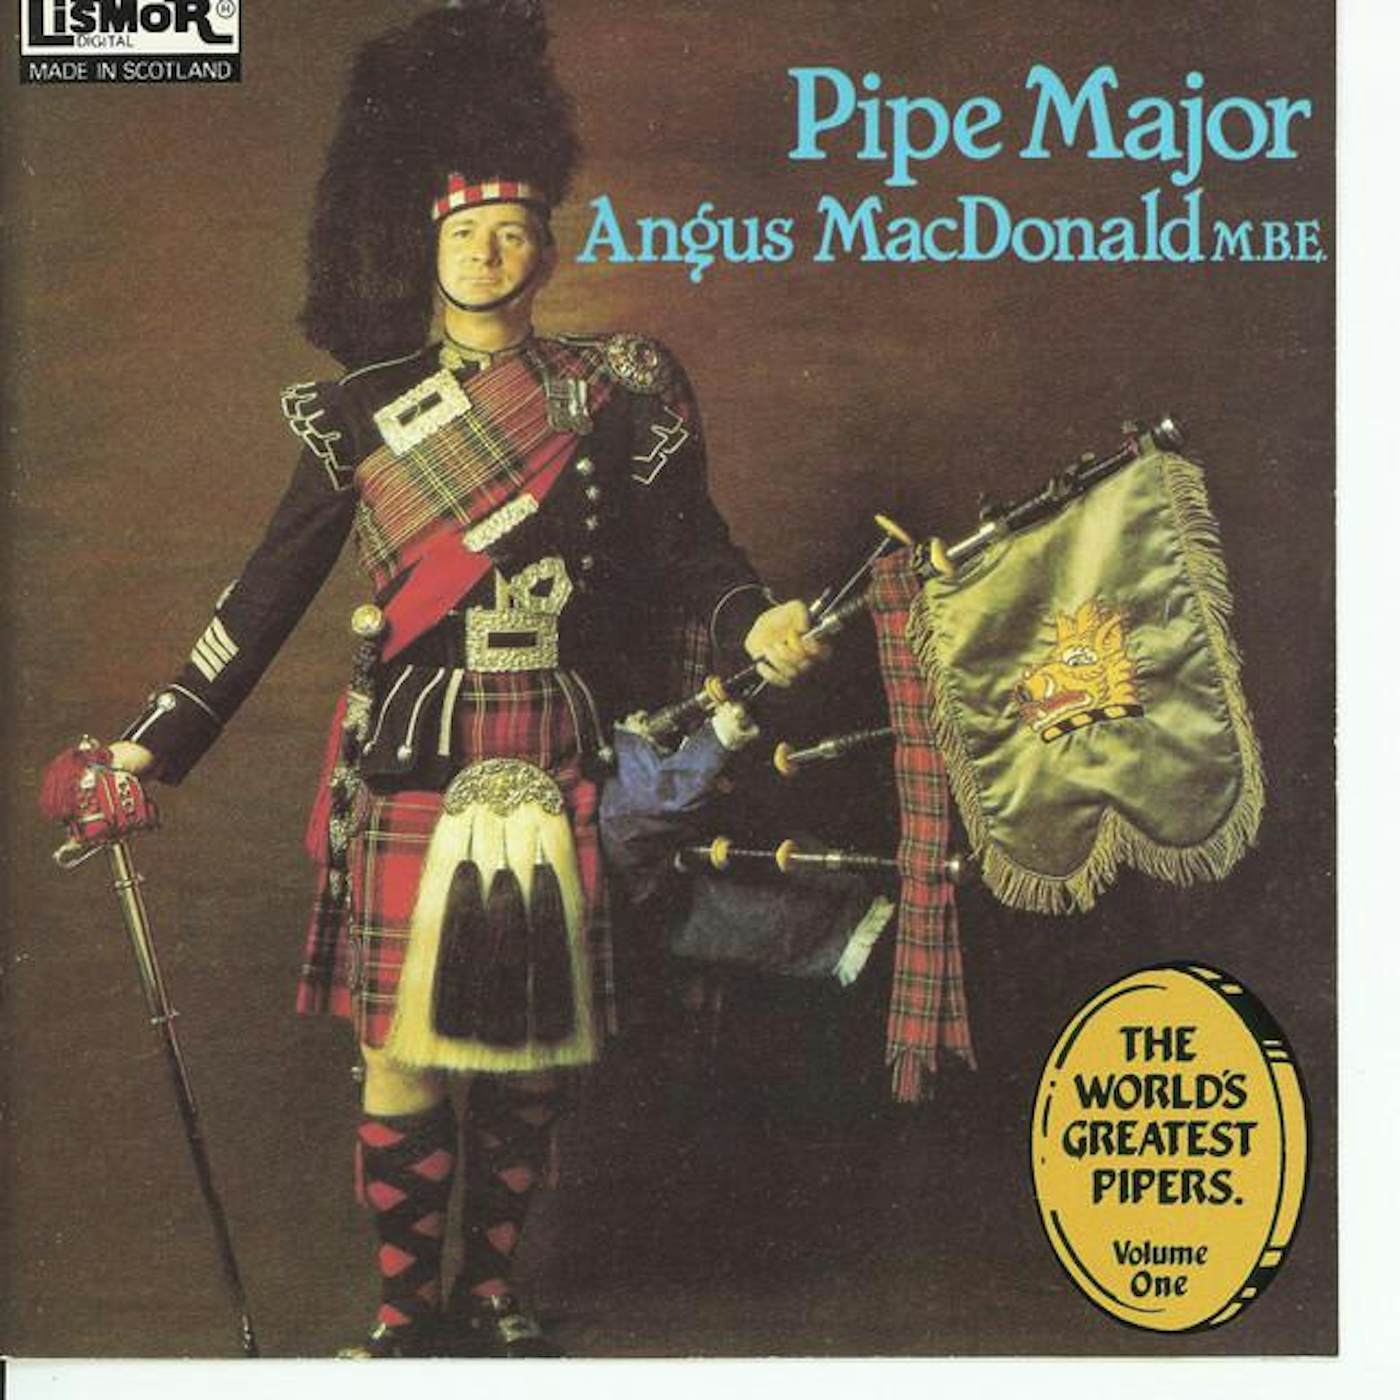 Pipe Major Angus MacDonald